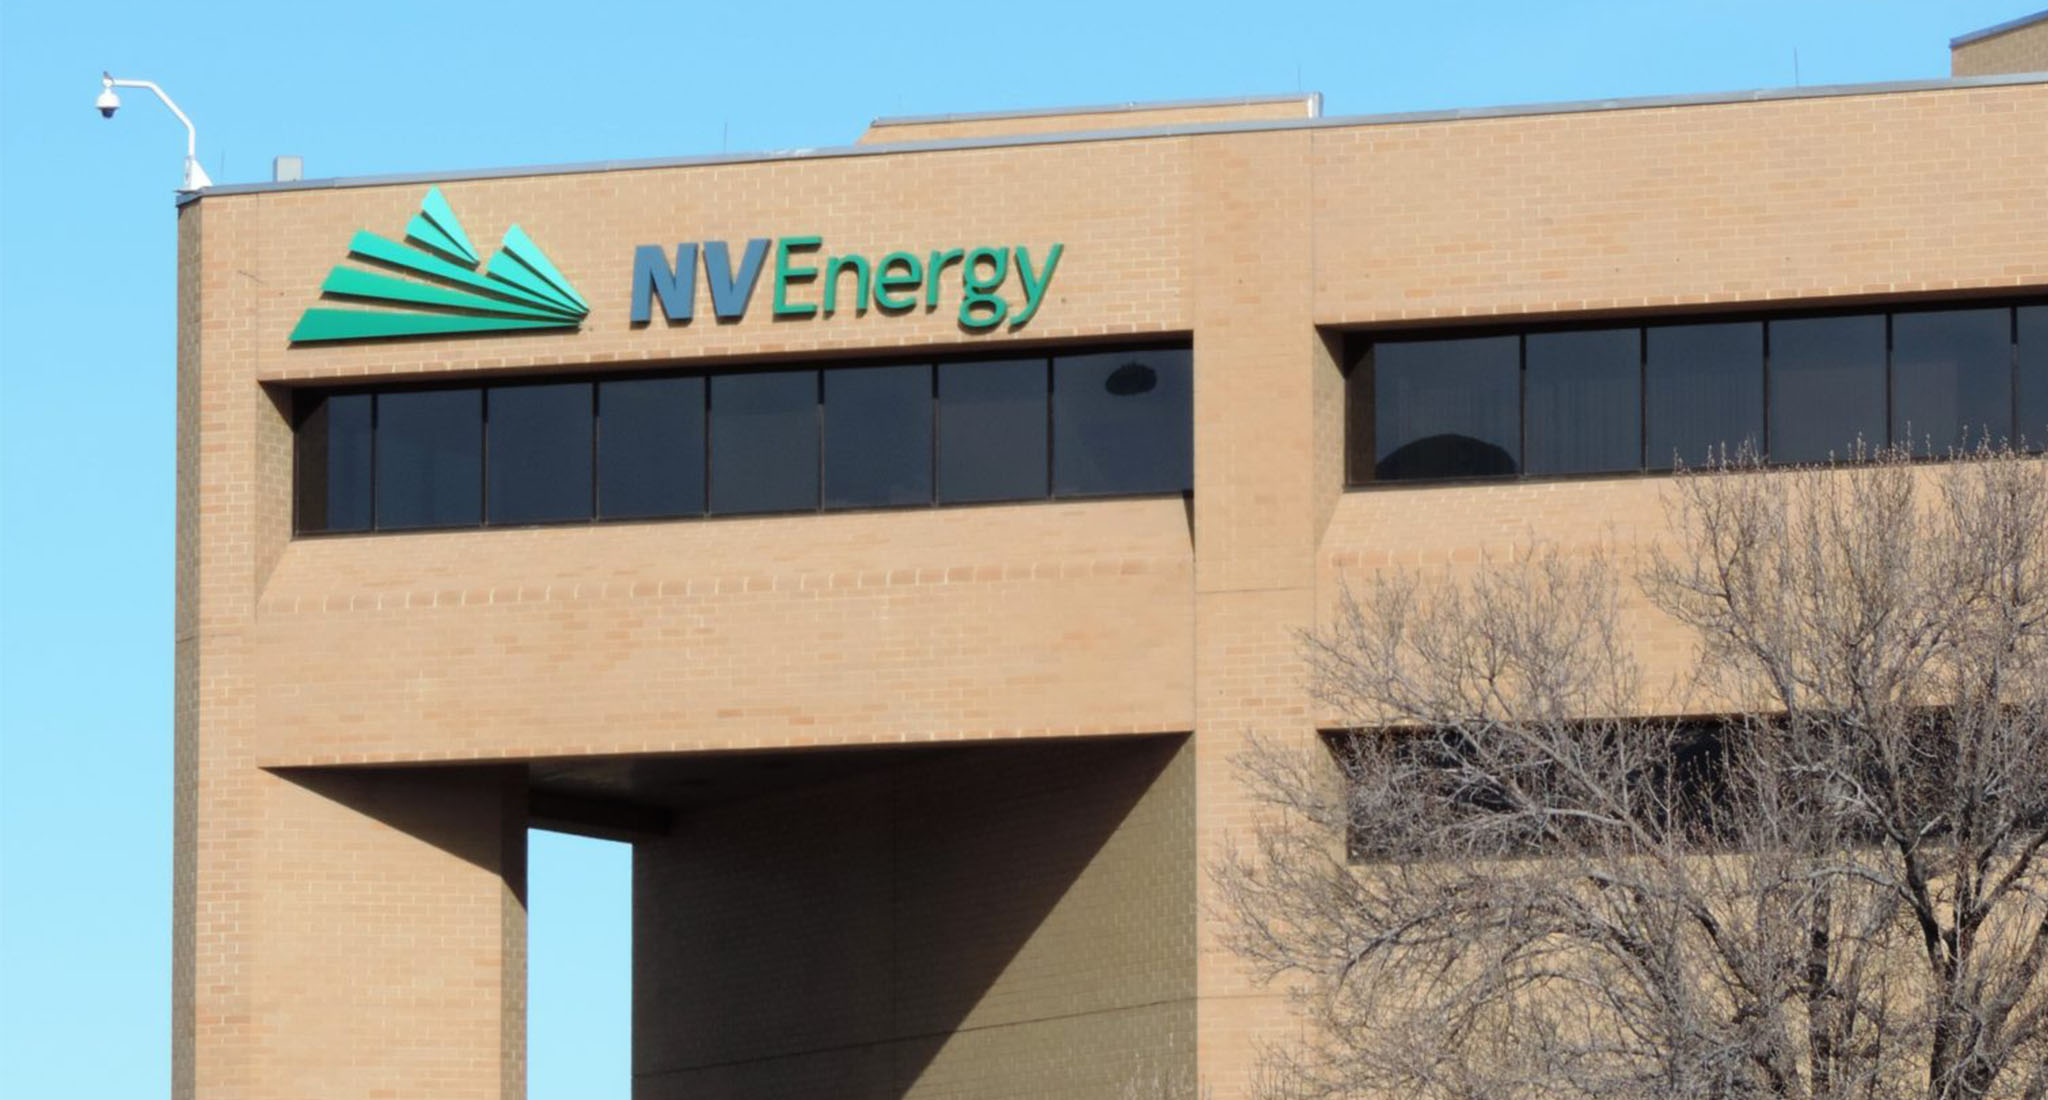 NV Energy, RHP Mechanical Systems